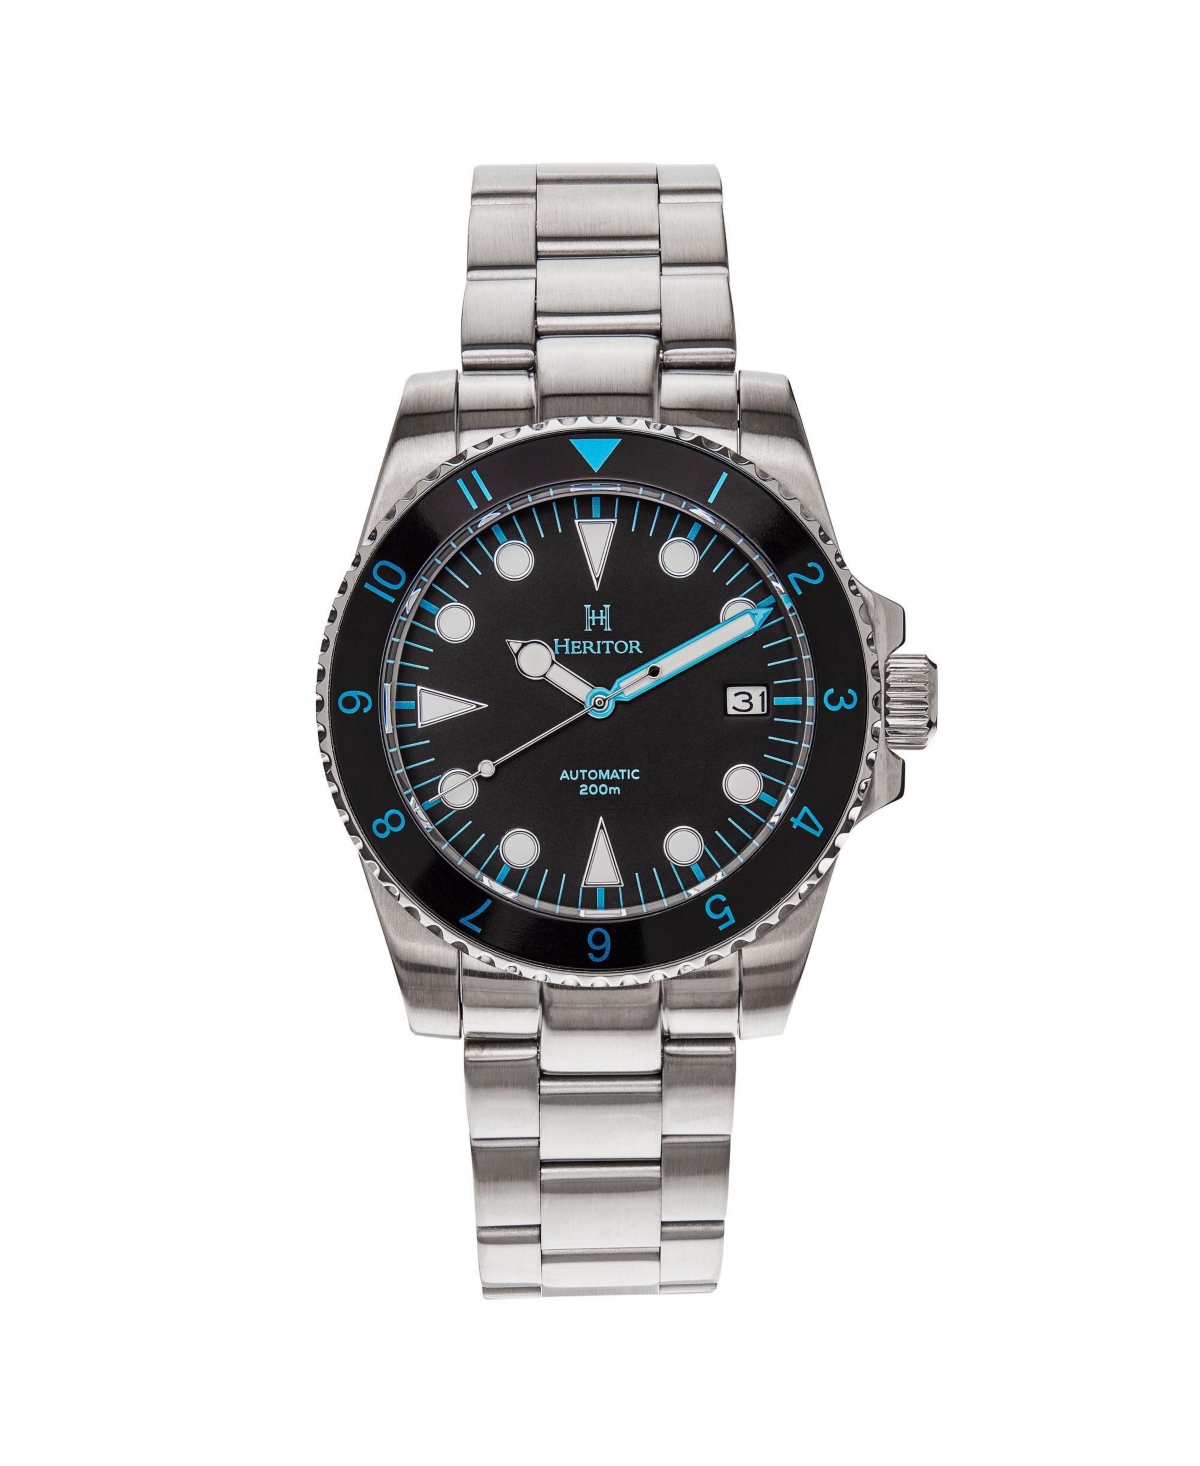 Men Luciano Stainless Steel Watch - Black/Blue, 41mm - Black/blue